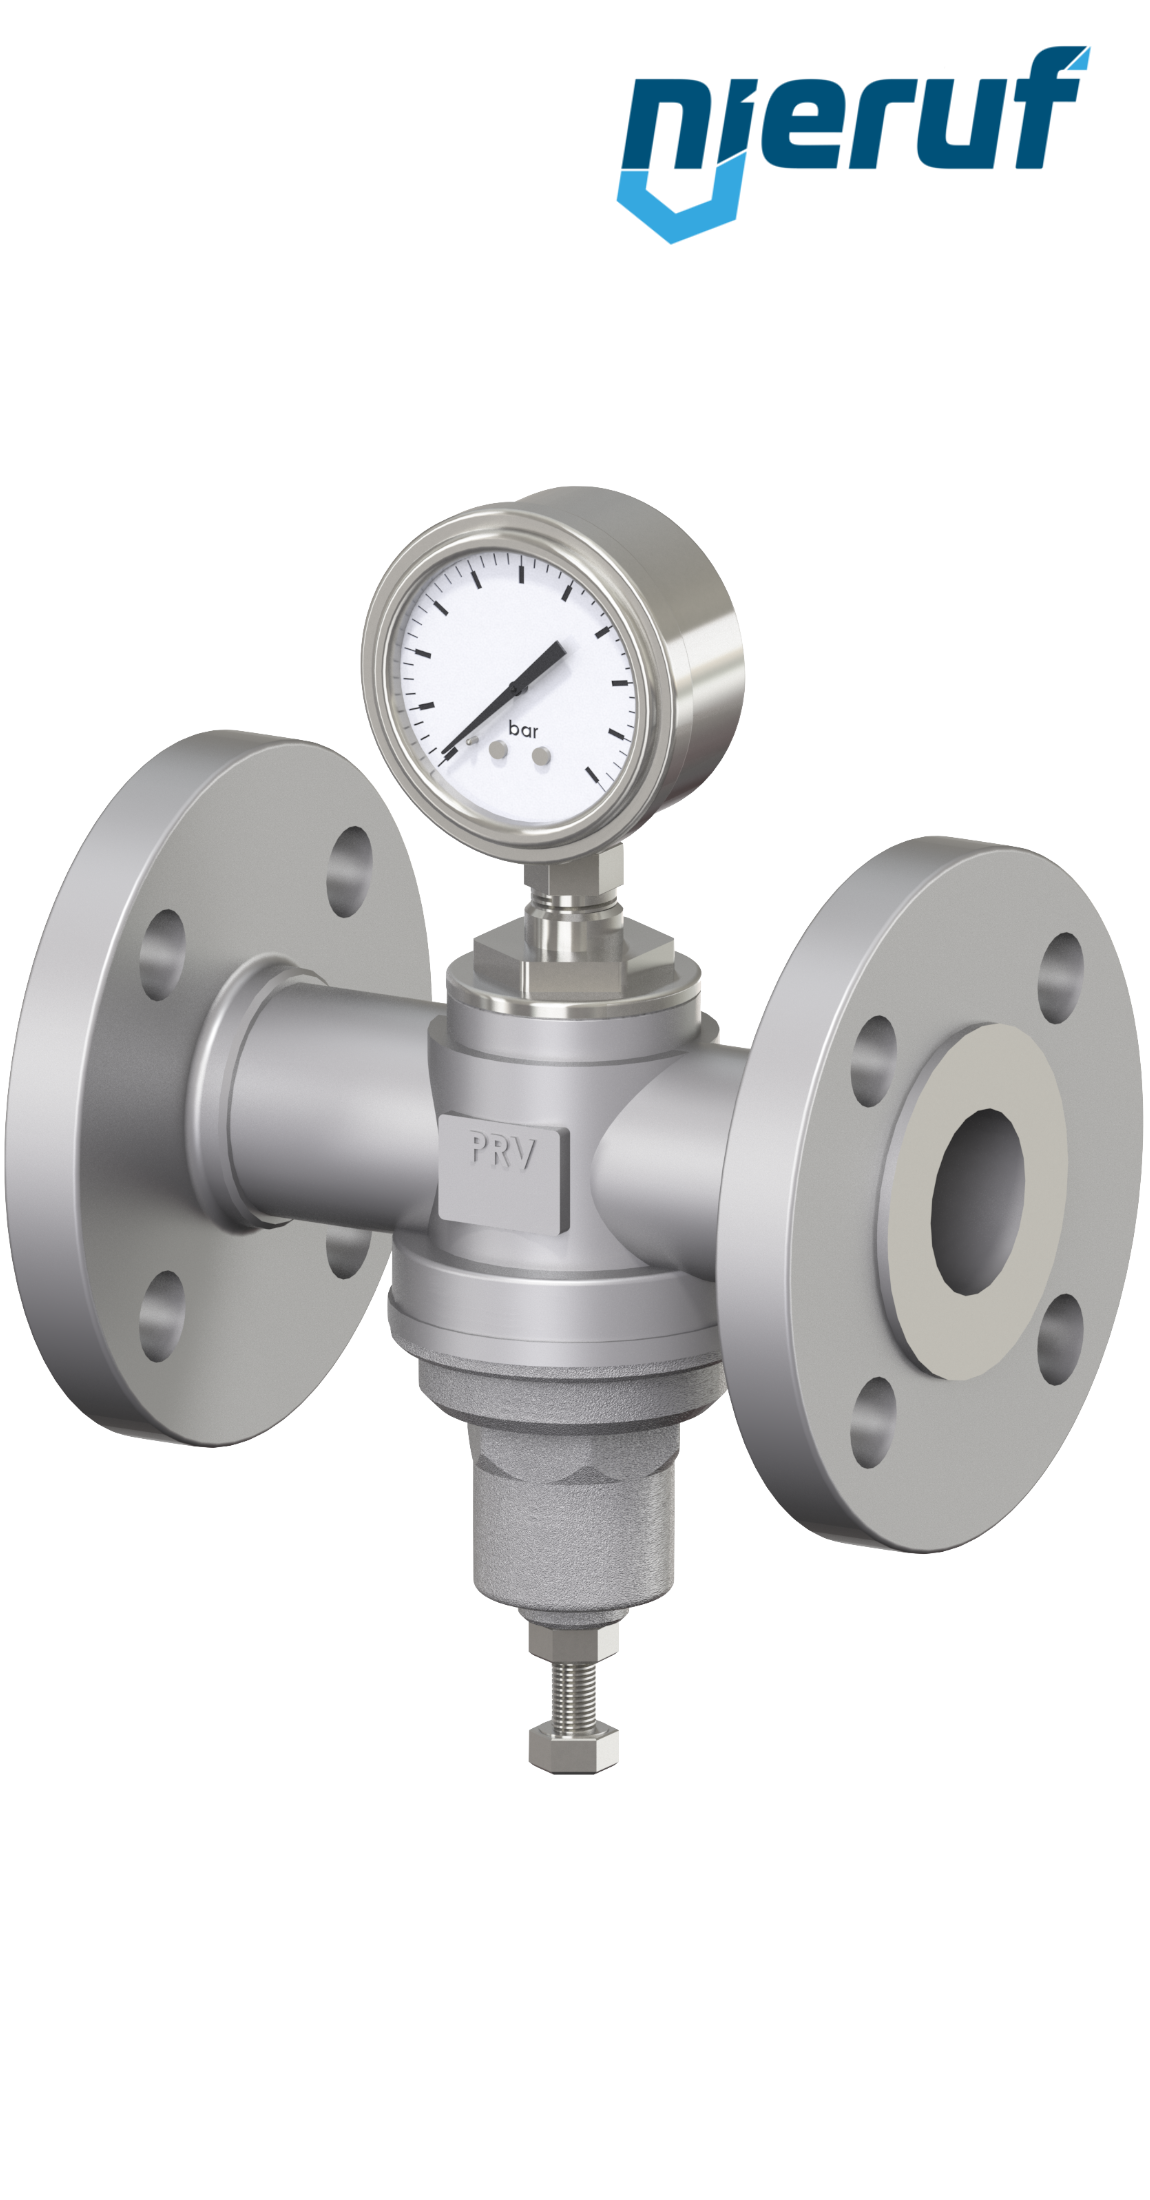 steam pressure reducing valve DN20 DM18 stainless steel 1.4408 1.0 - 6.0 bar